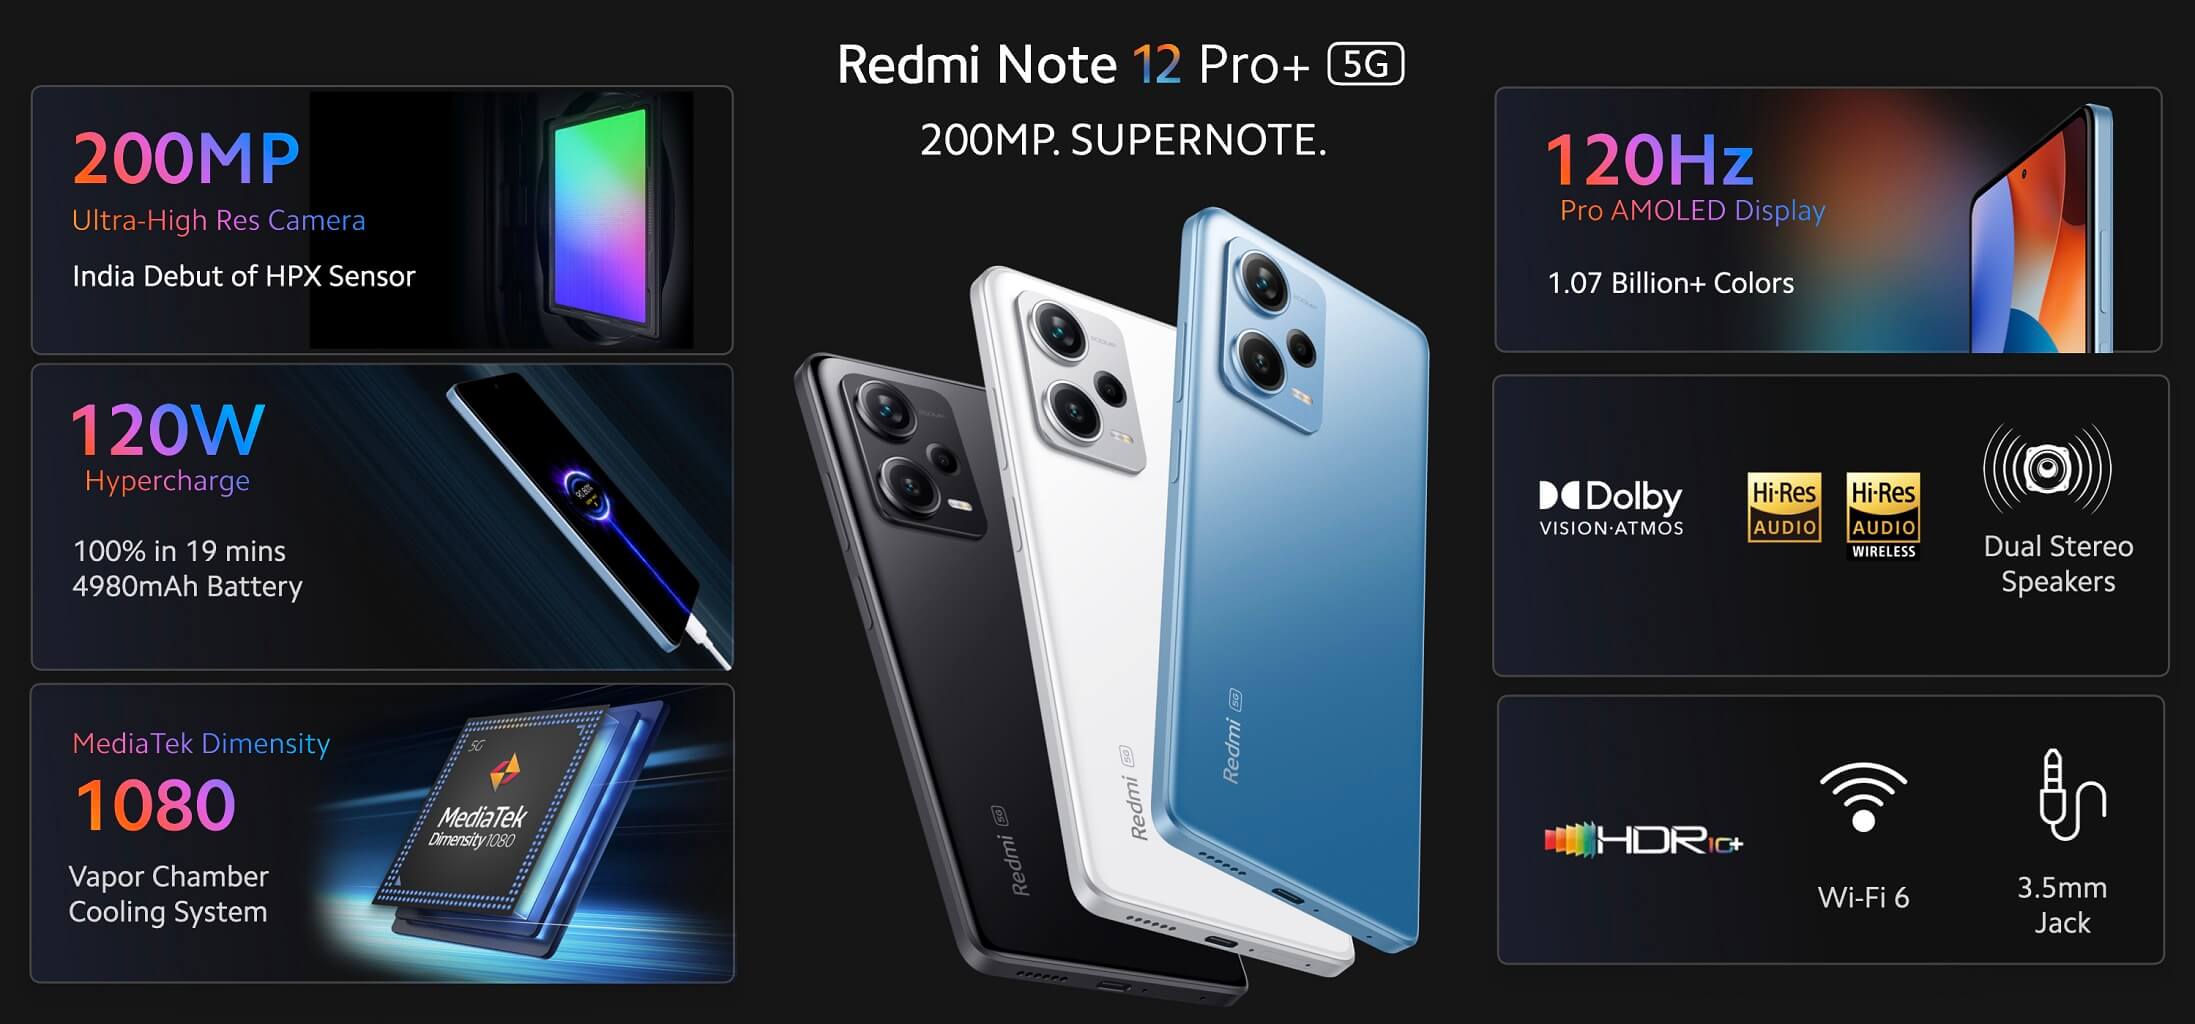 Redmi Note 12 Pro Plus features.